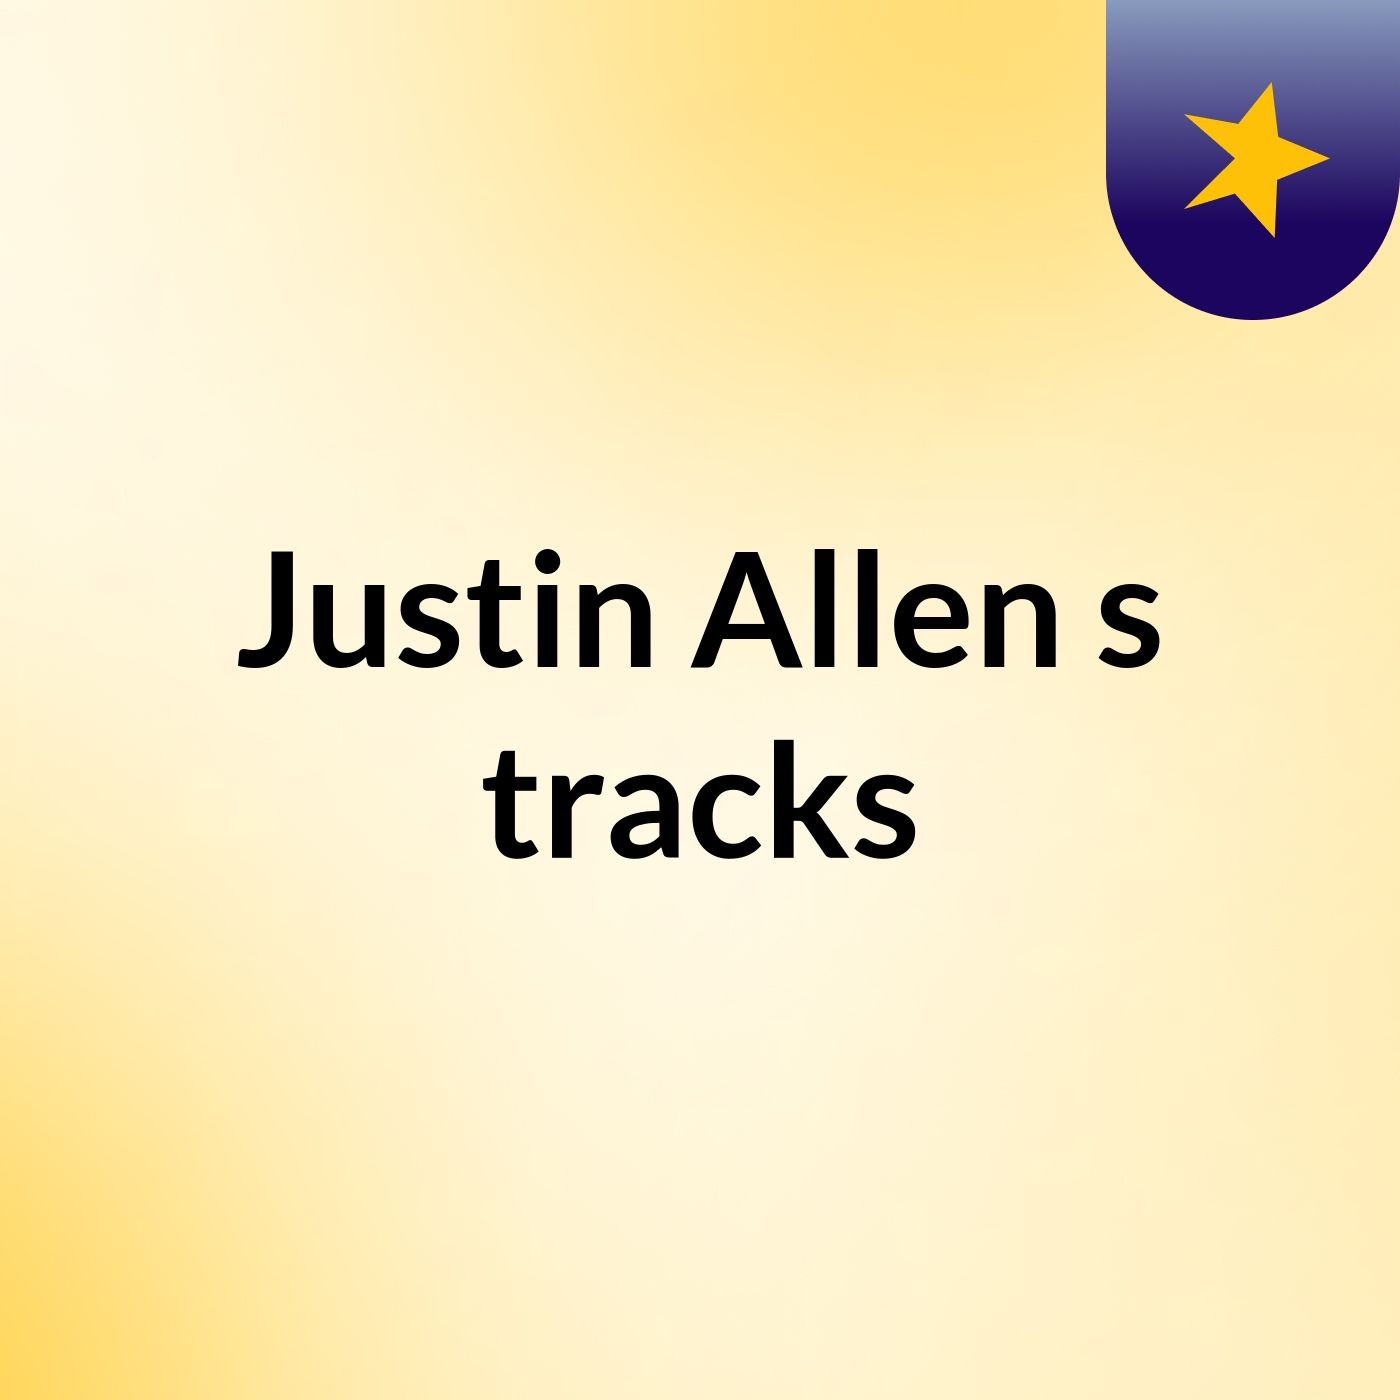 Justin Allen's tracks